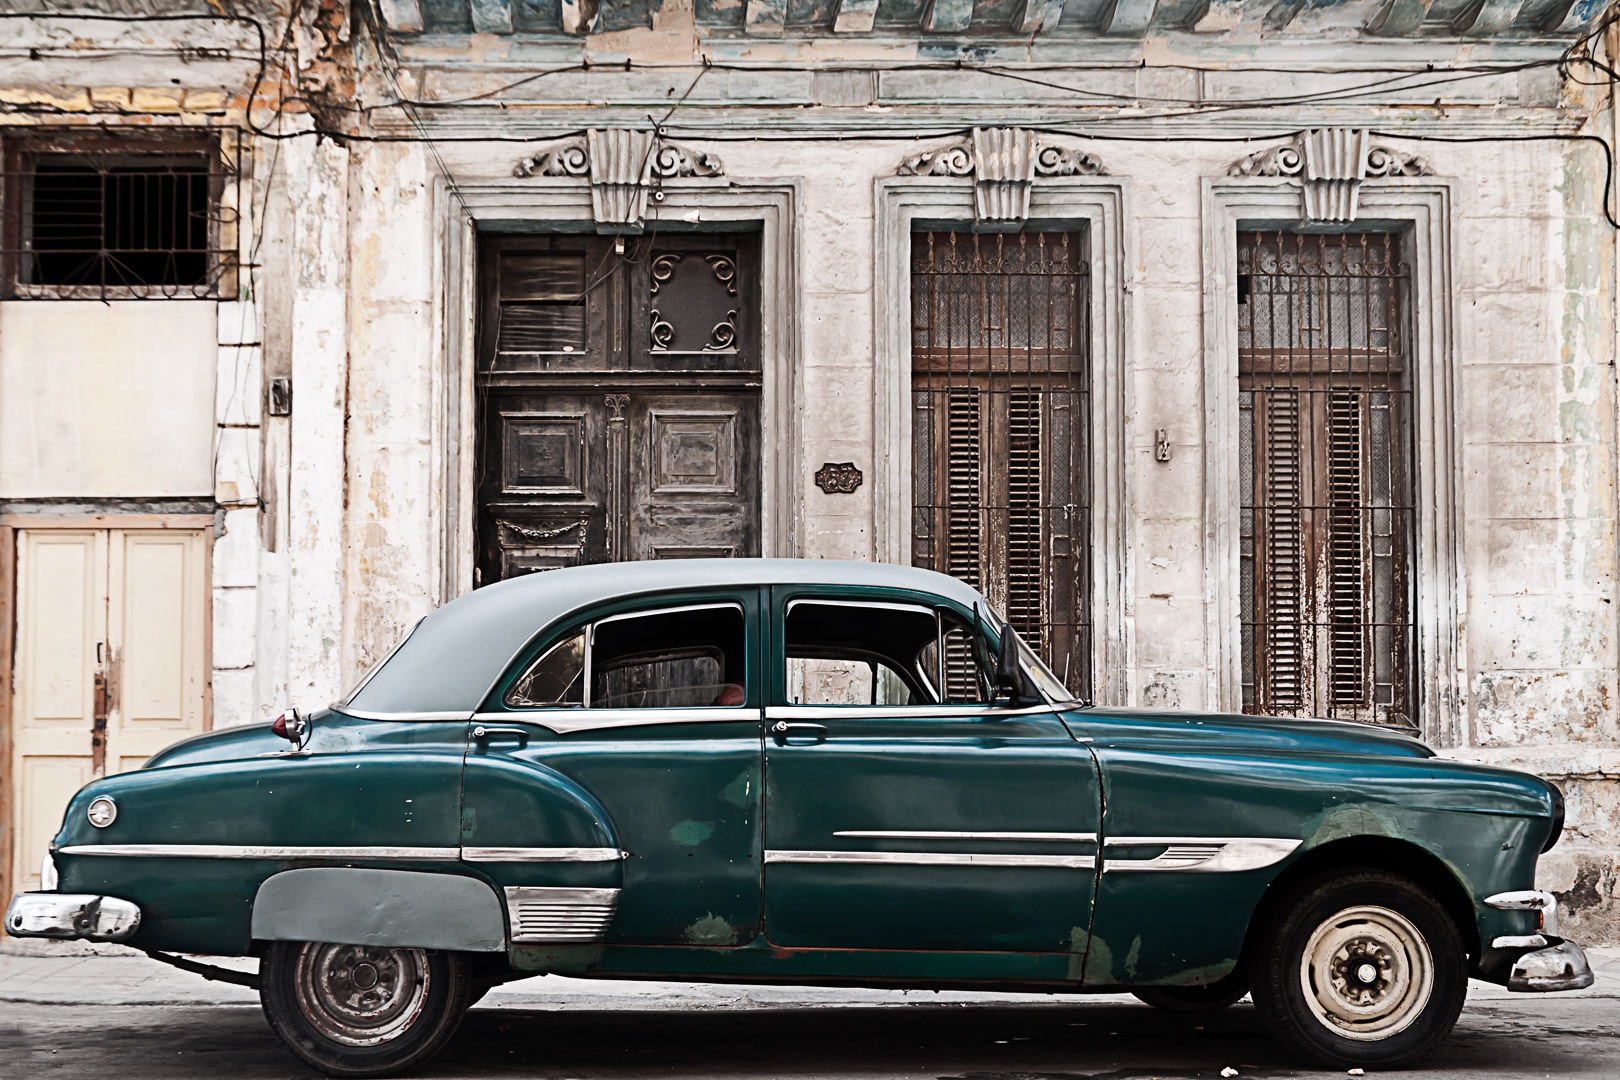 The beauty of decay in Centro Habana